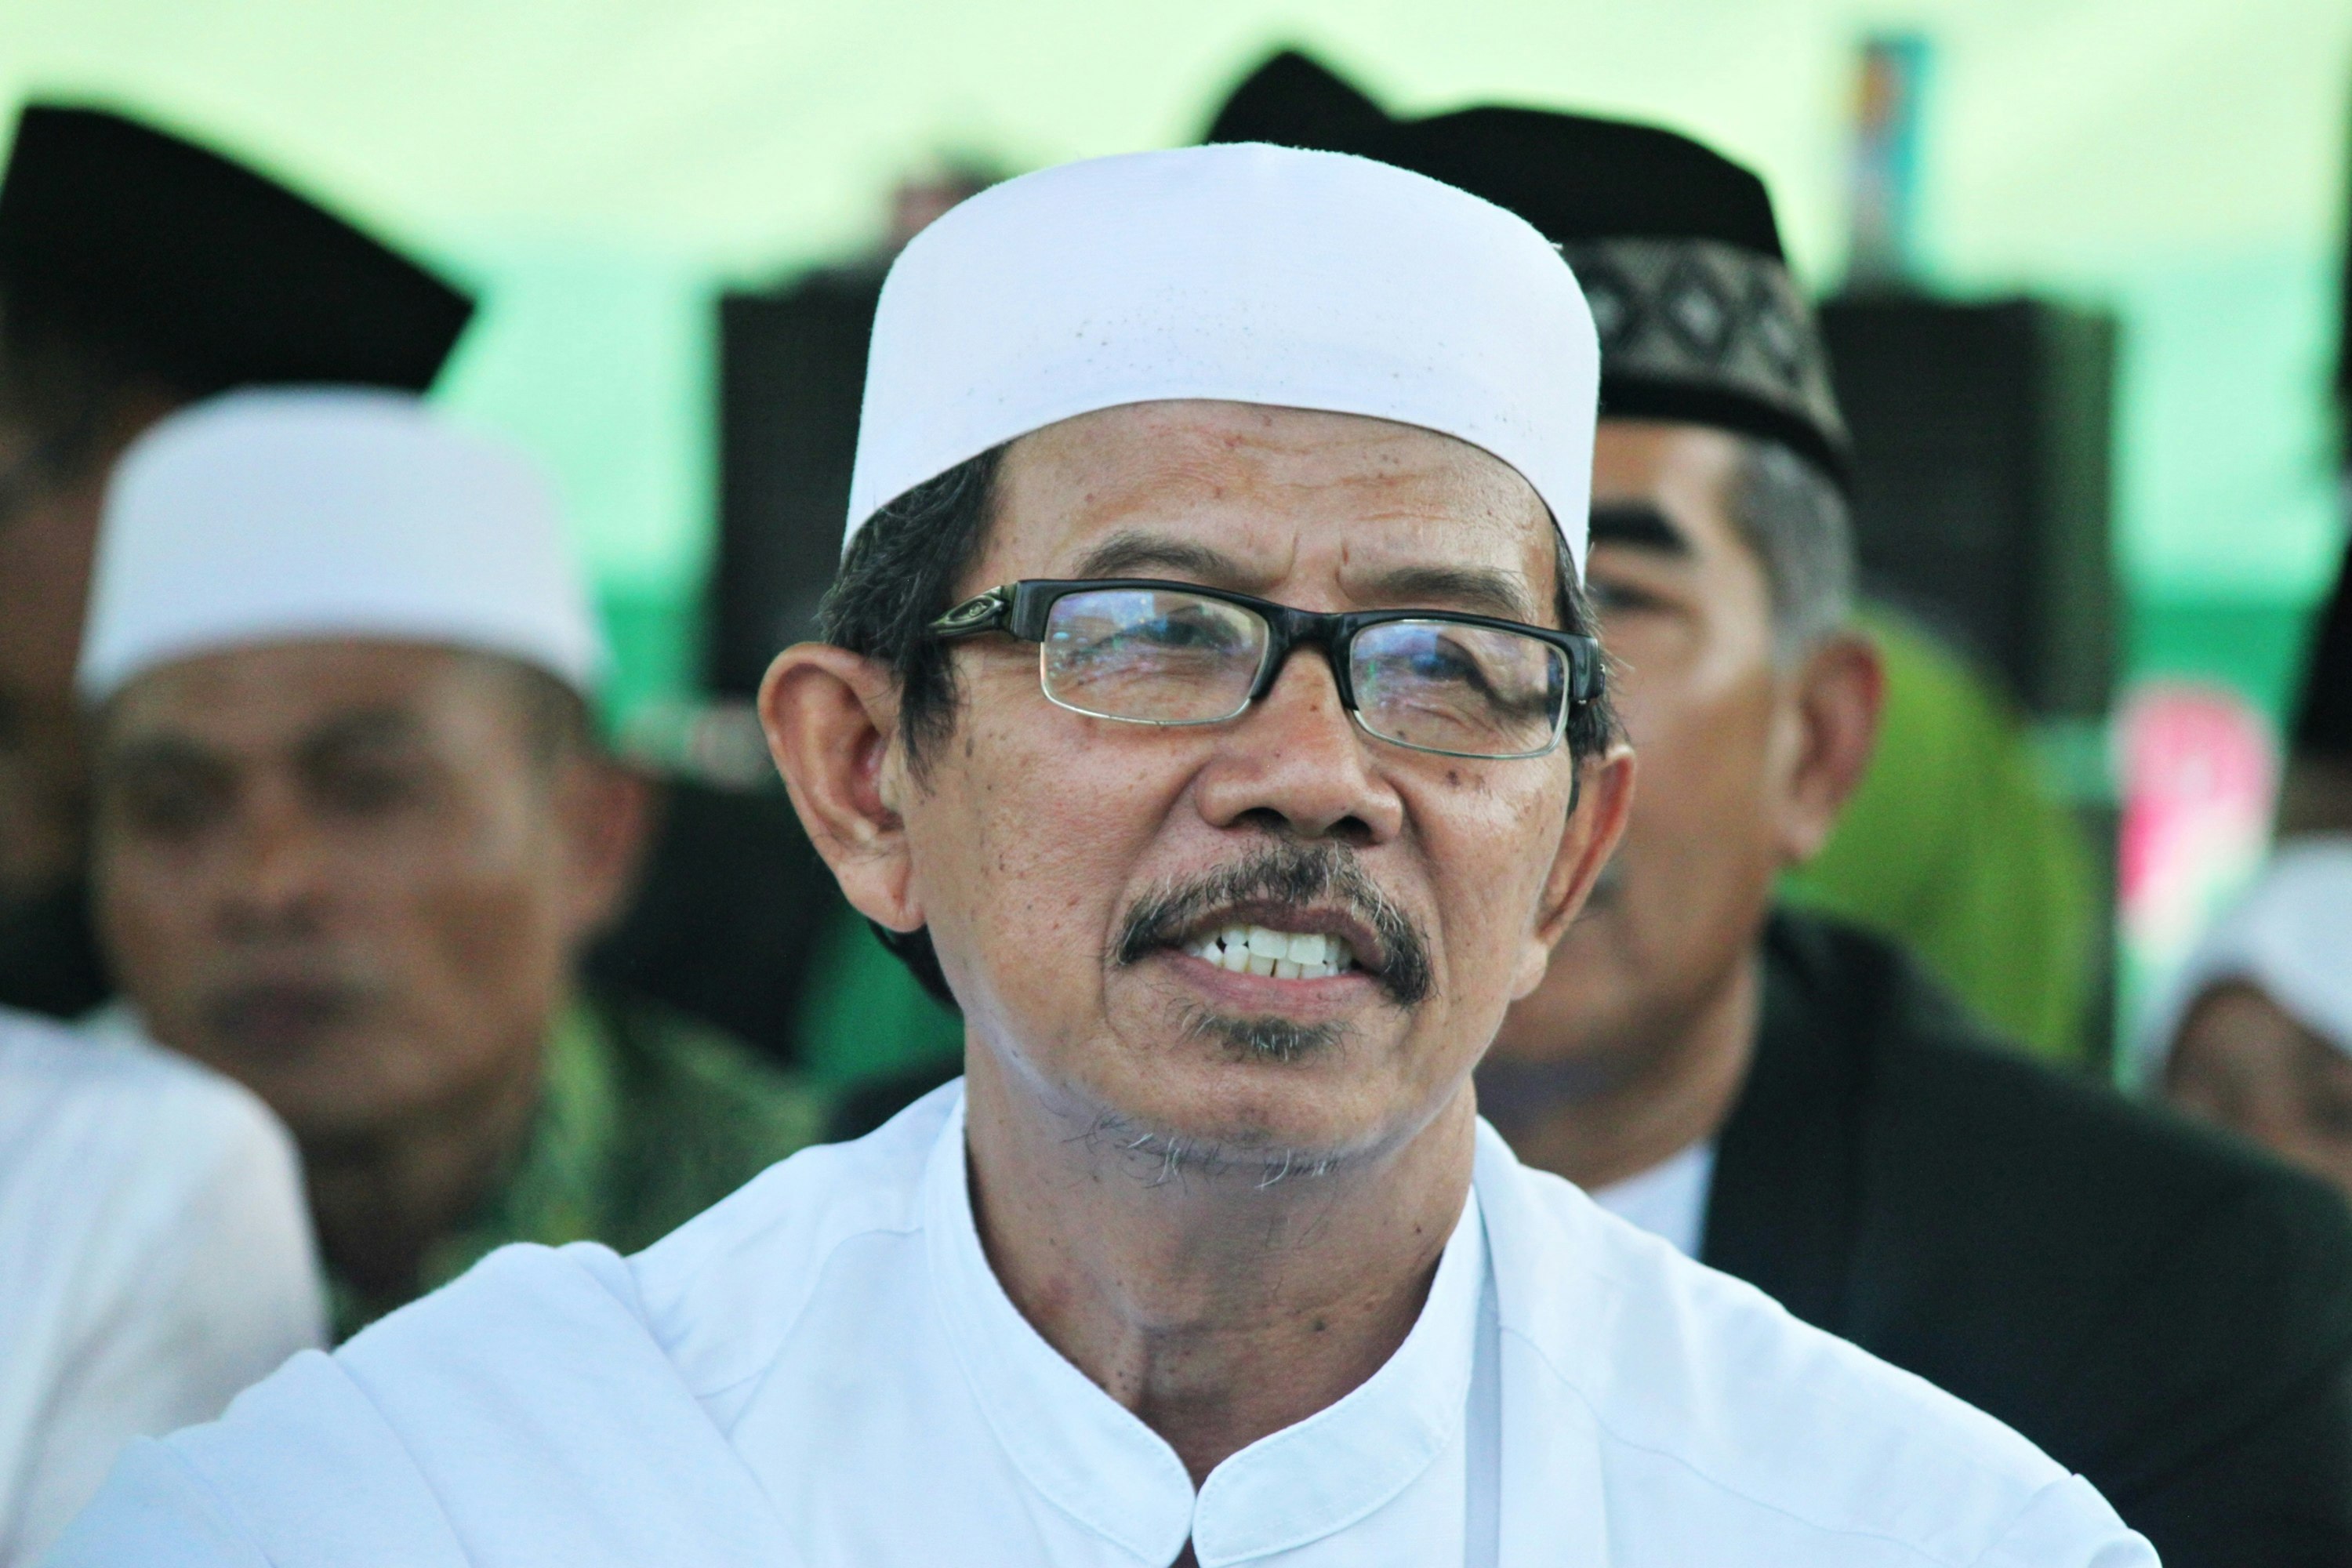 Kyai Sobri Jatilawang merupakan pengasuh Pondok pesantren Al Falah Mangunsari Tinggarjaya 